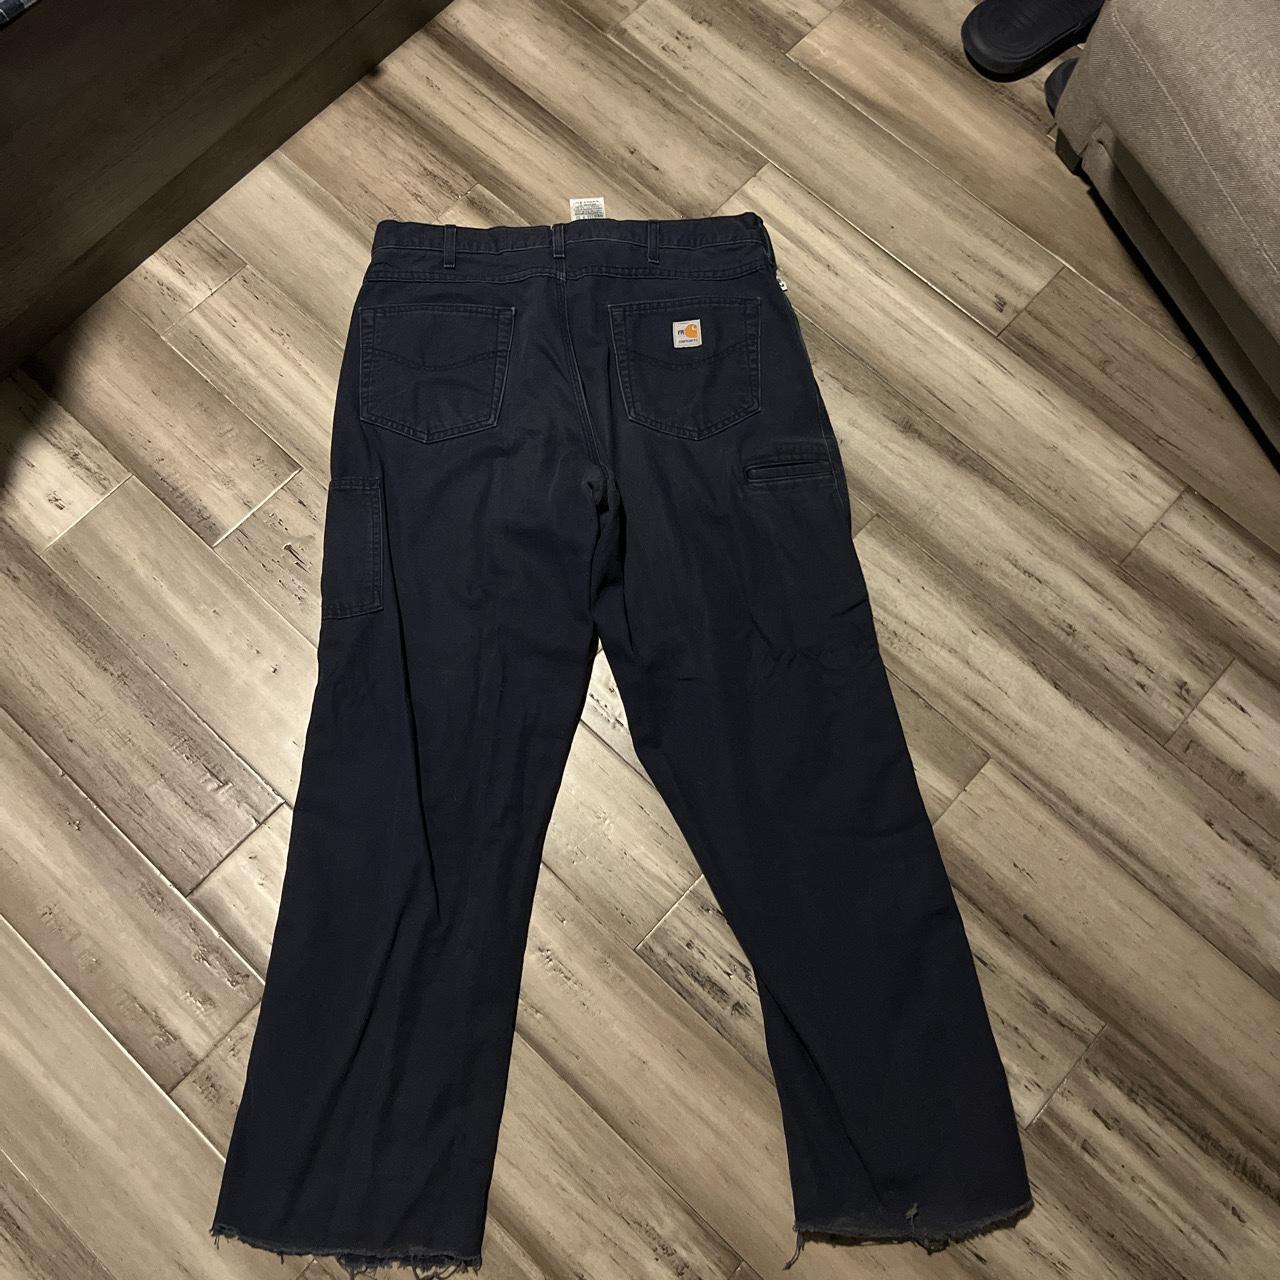 Vintage Navy blue carhartt pants size 36x32 but cut... - Depop